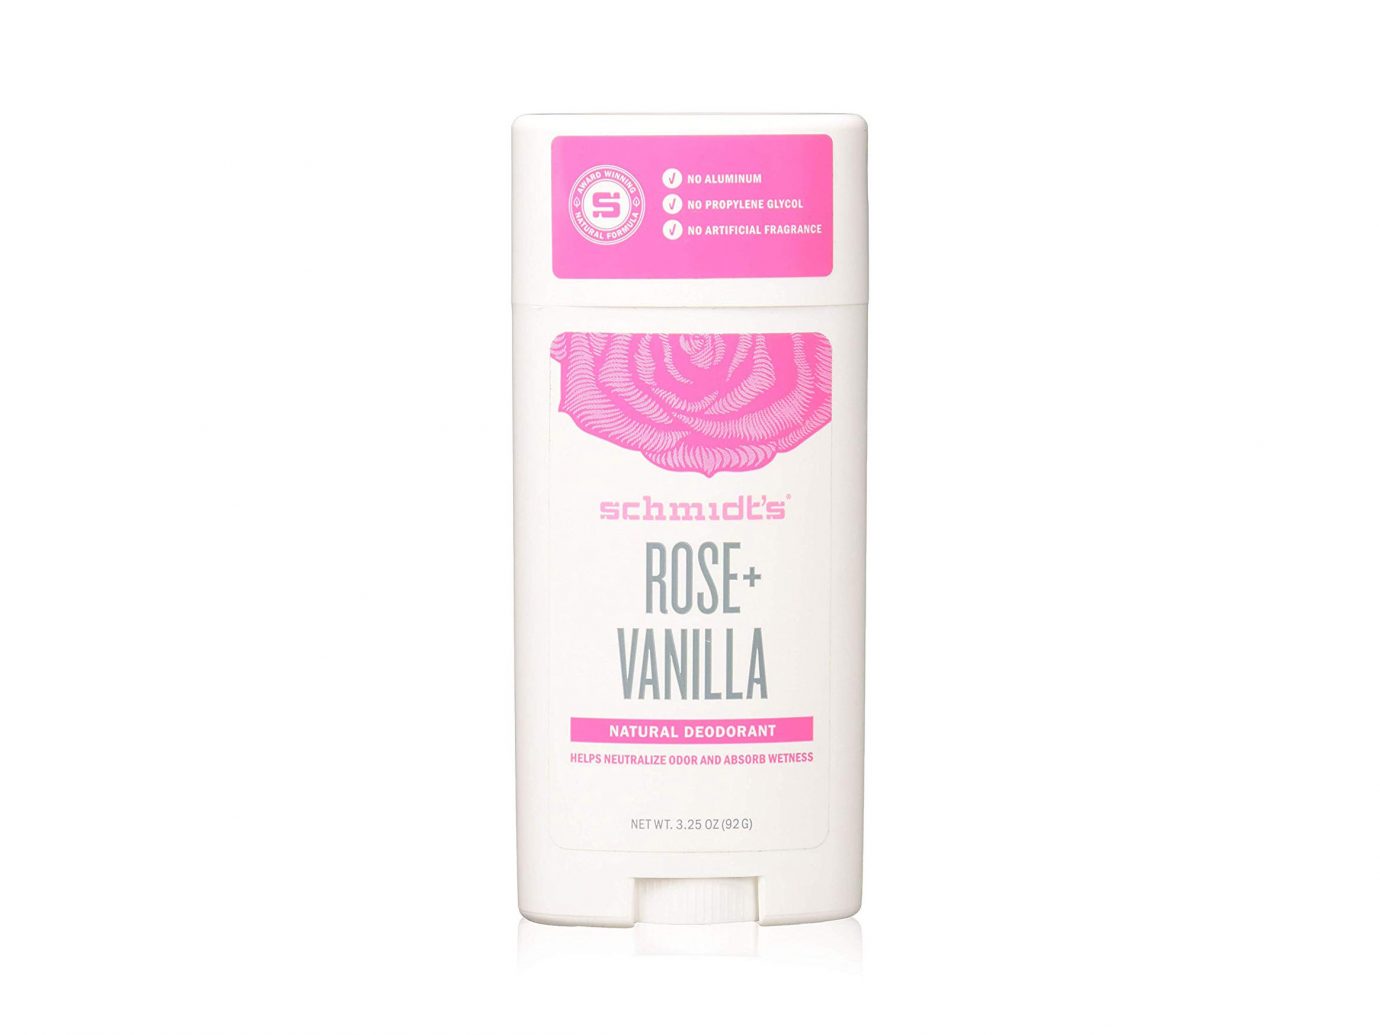 Schmidt's Natural Deodorant: Rose and Vanilla